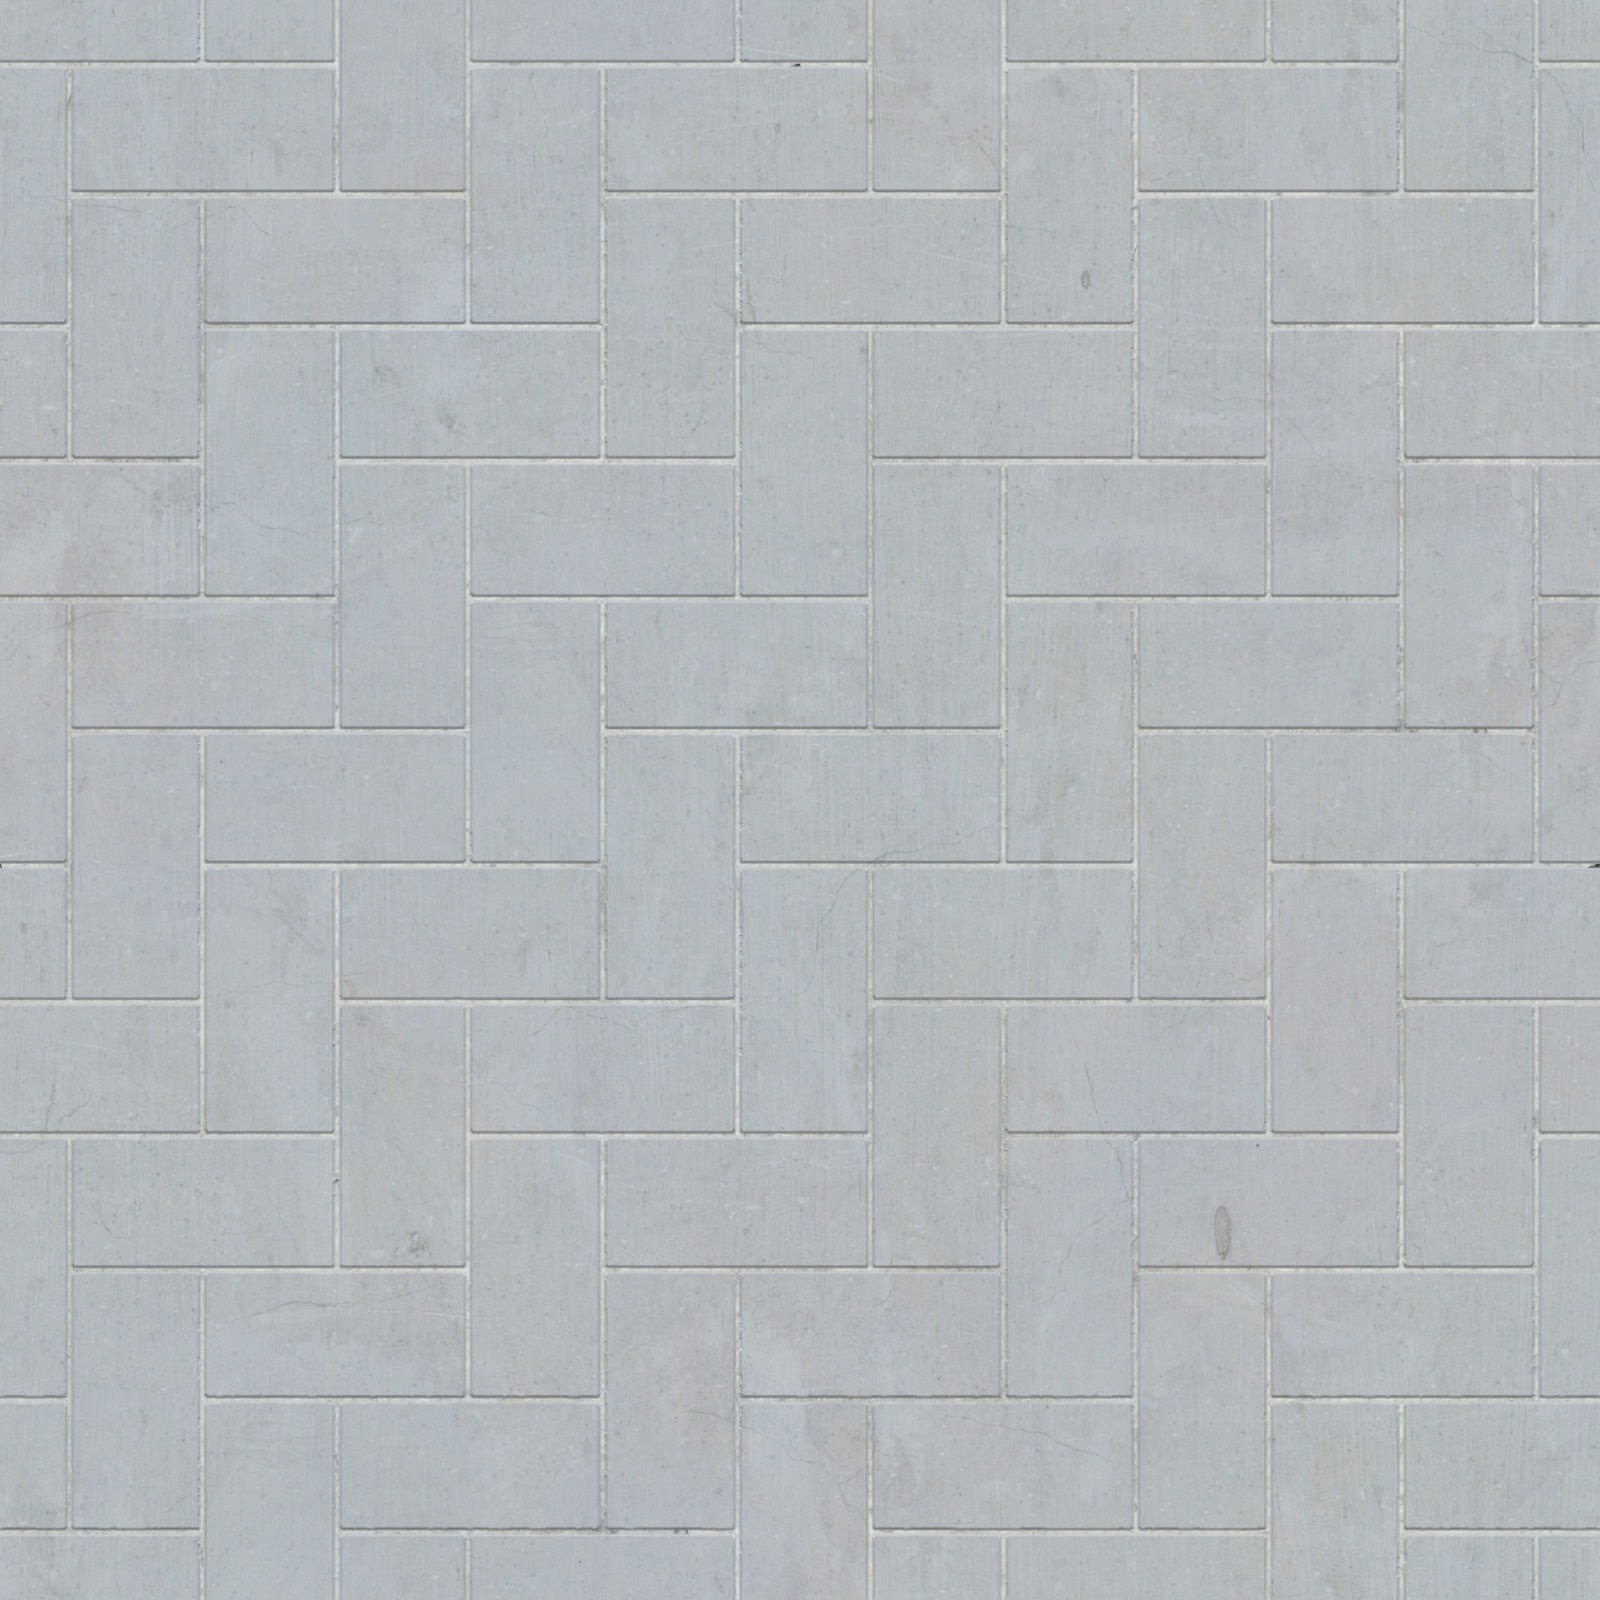 Brick concrete floor tiles seamless texture 2048x2048